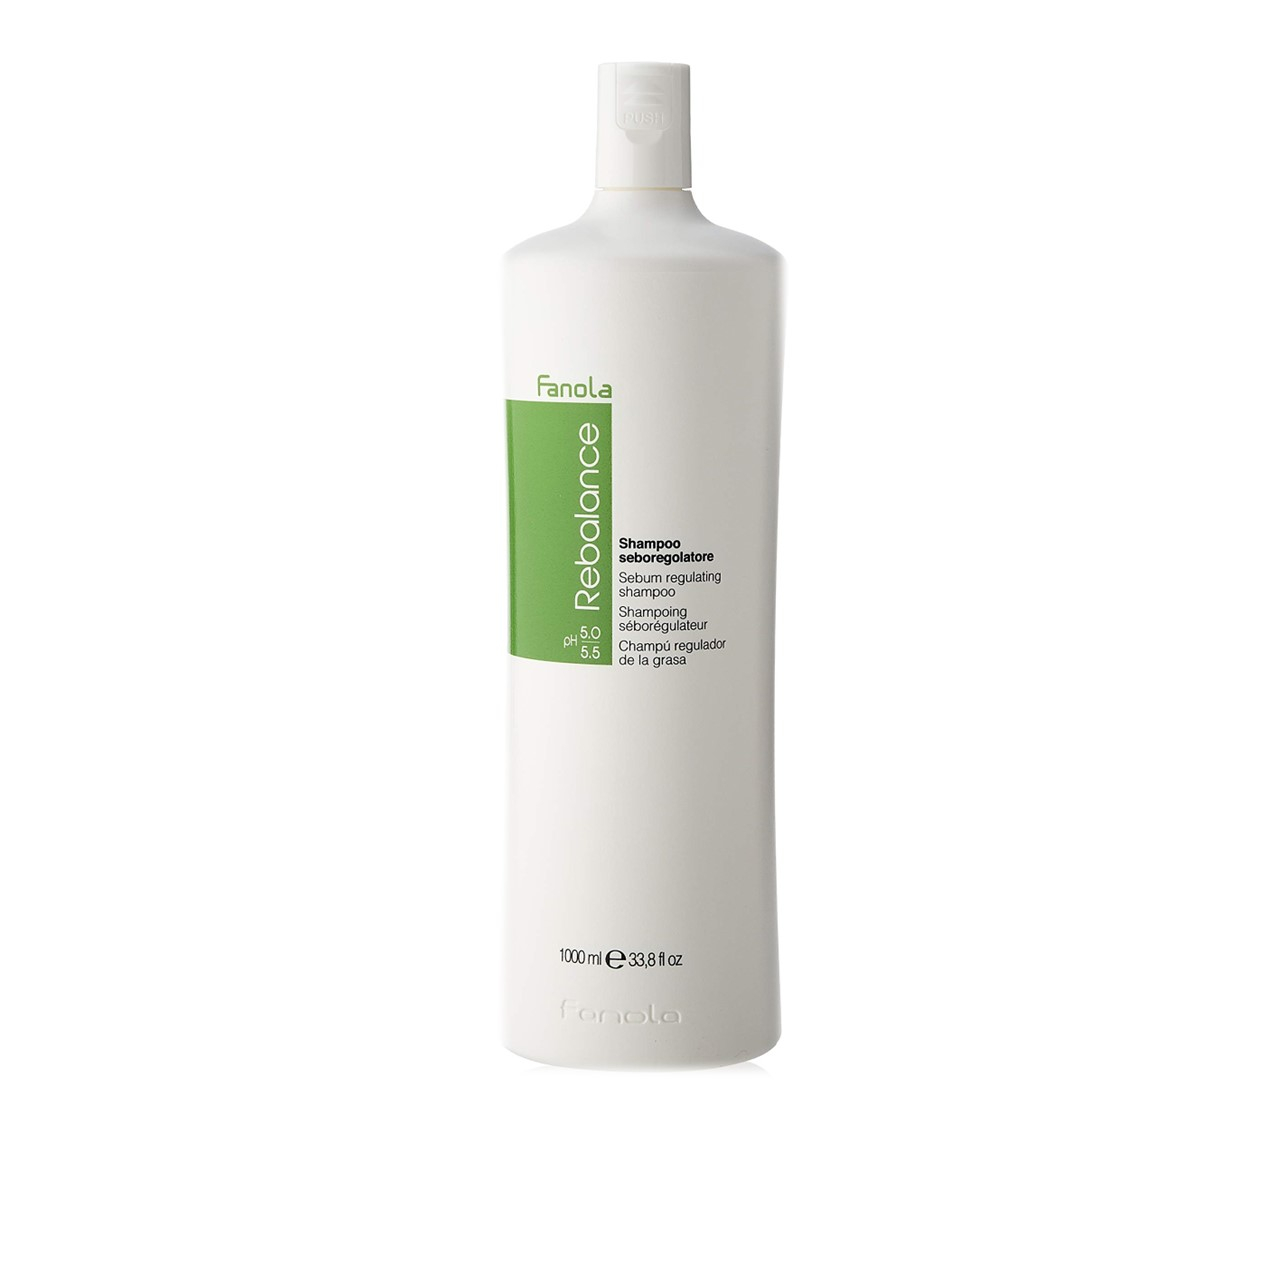 Fanola Rebalance Sebum Regulating Shampoo 1L